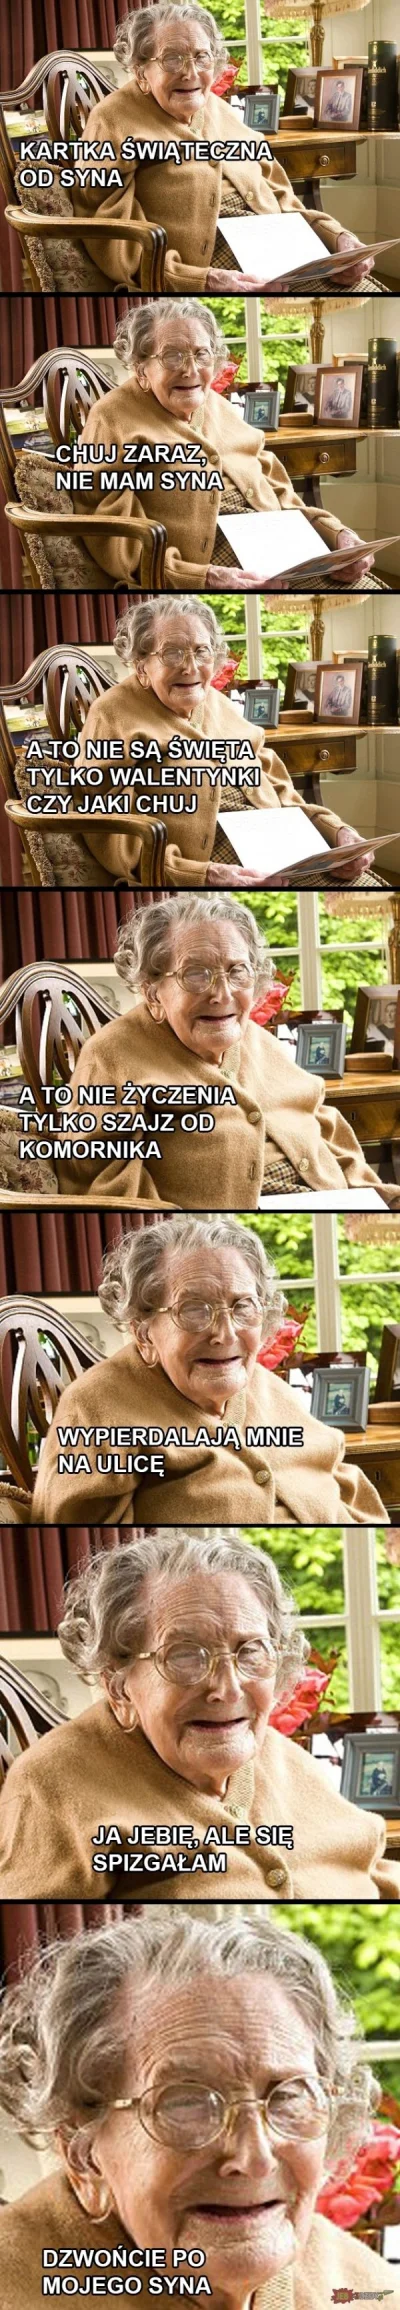 Z.....m - #hehszki #humorobrazkowy #humor